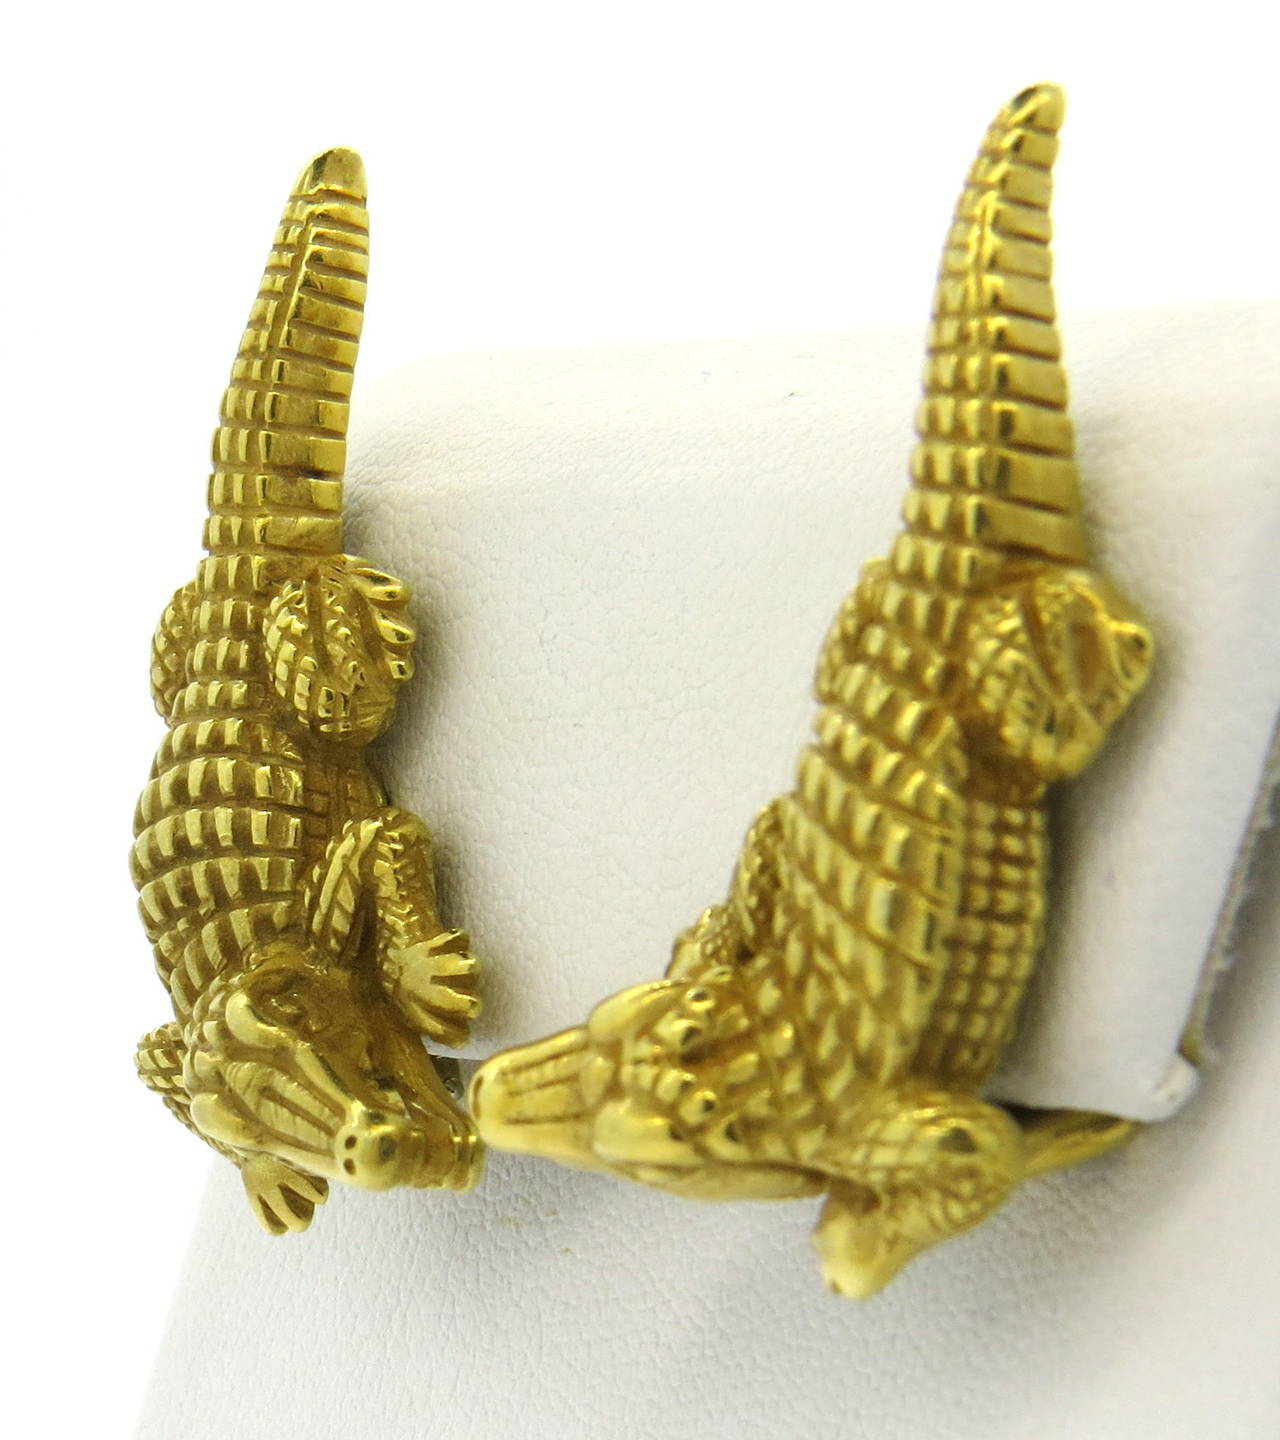 18k gold alligator earrings by Kieselstein-Cord, measuring 39mm x 21mm. Marked 1986, maker's hallmark, Kieselstein-Cord and 750. weight - 23.1gr